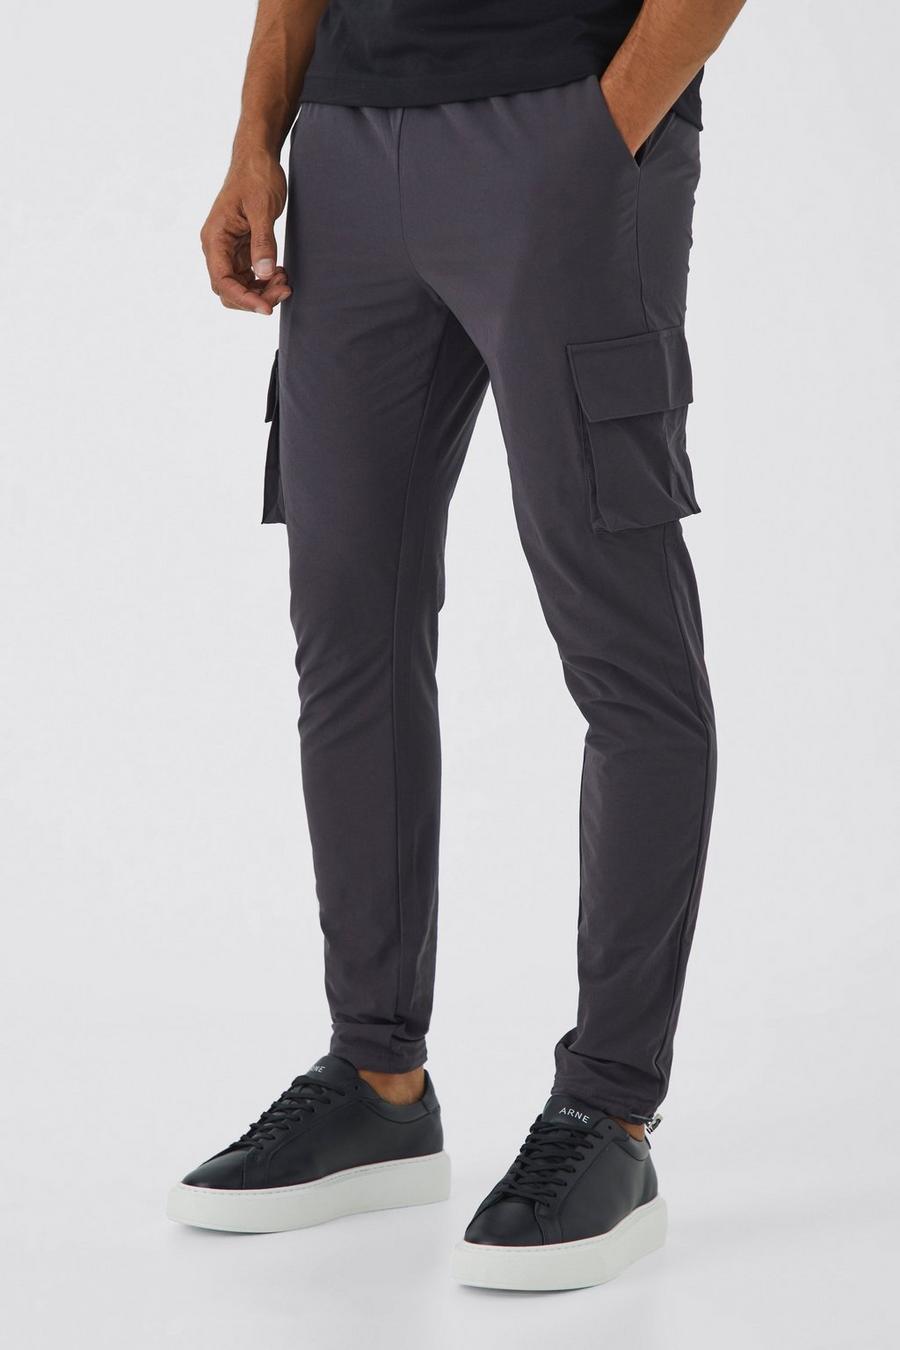 Pantaloni Cargo leggeri in Stretch Skinny Fit elasticizzati, Charcoal